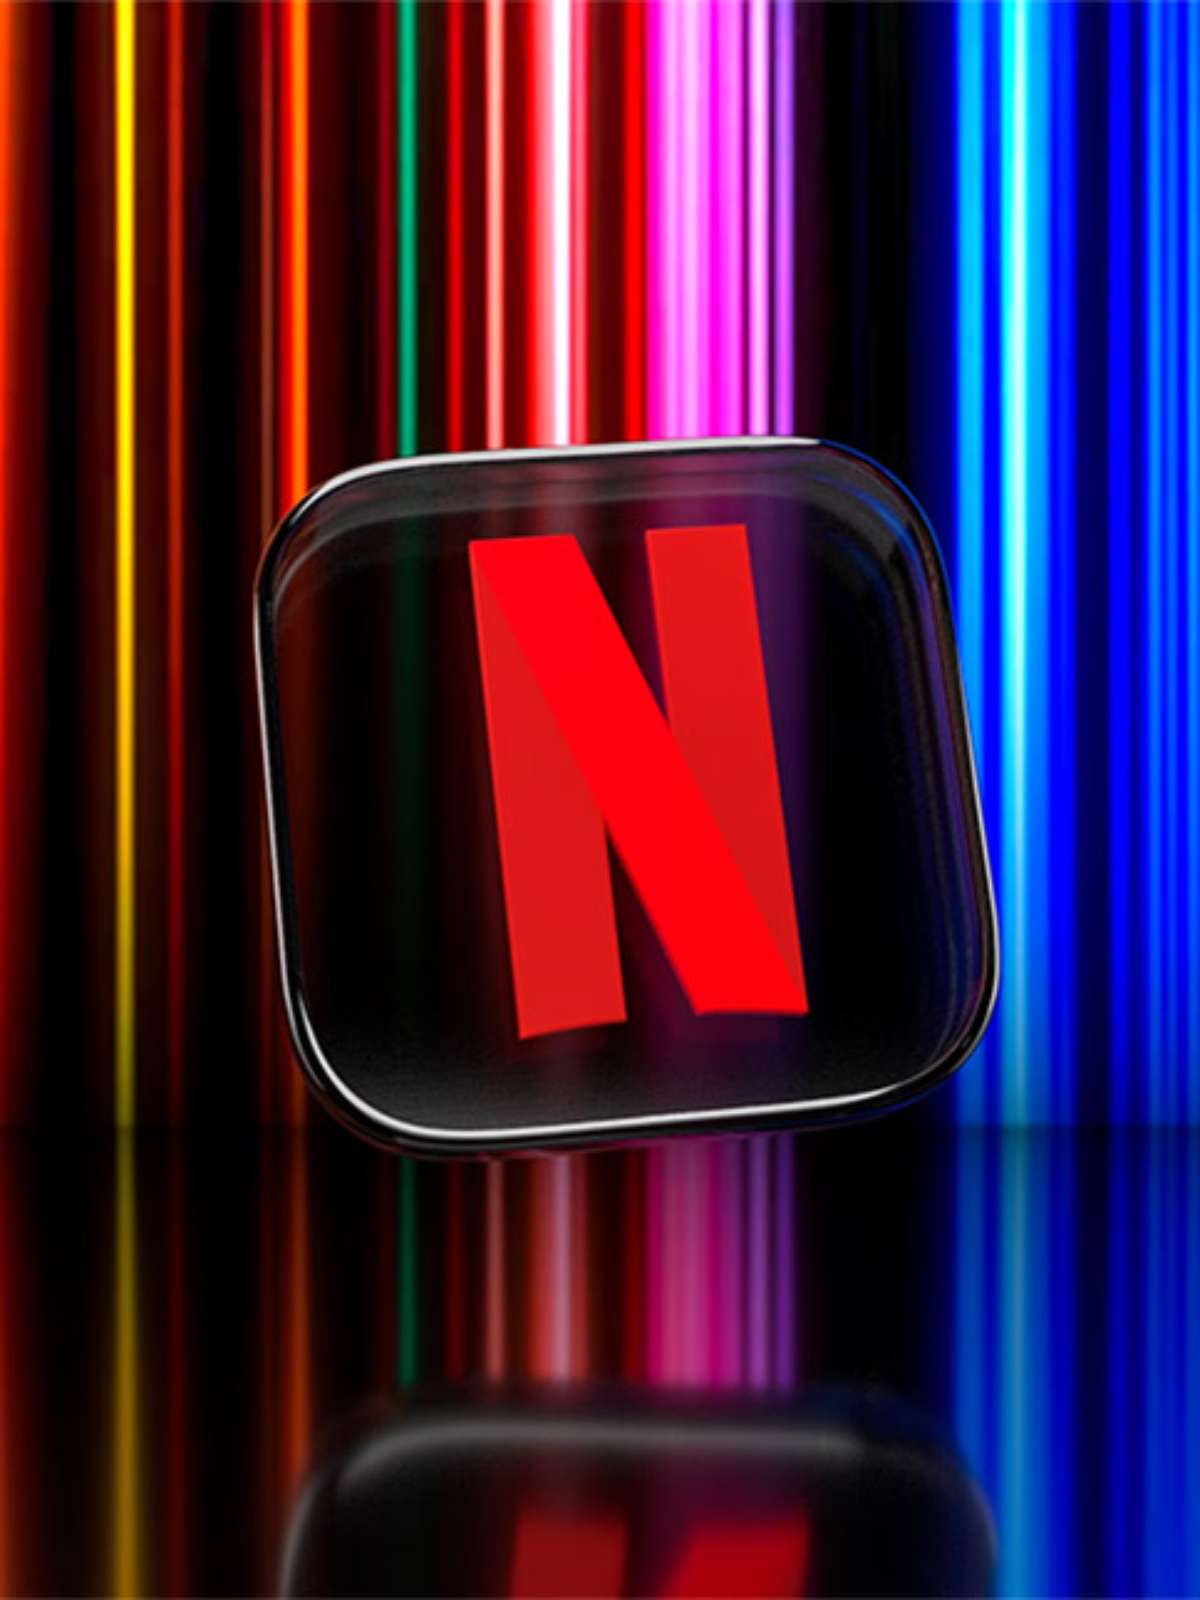 Netflix: crise de assinantes - Massa News